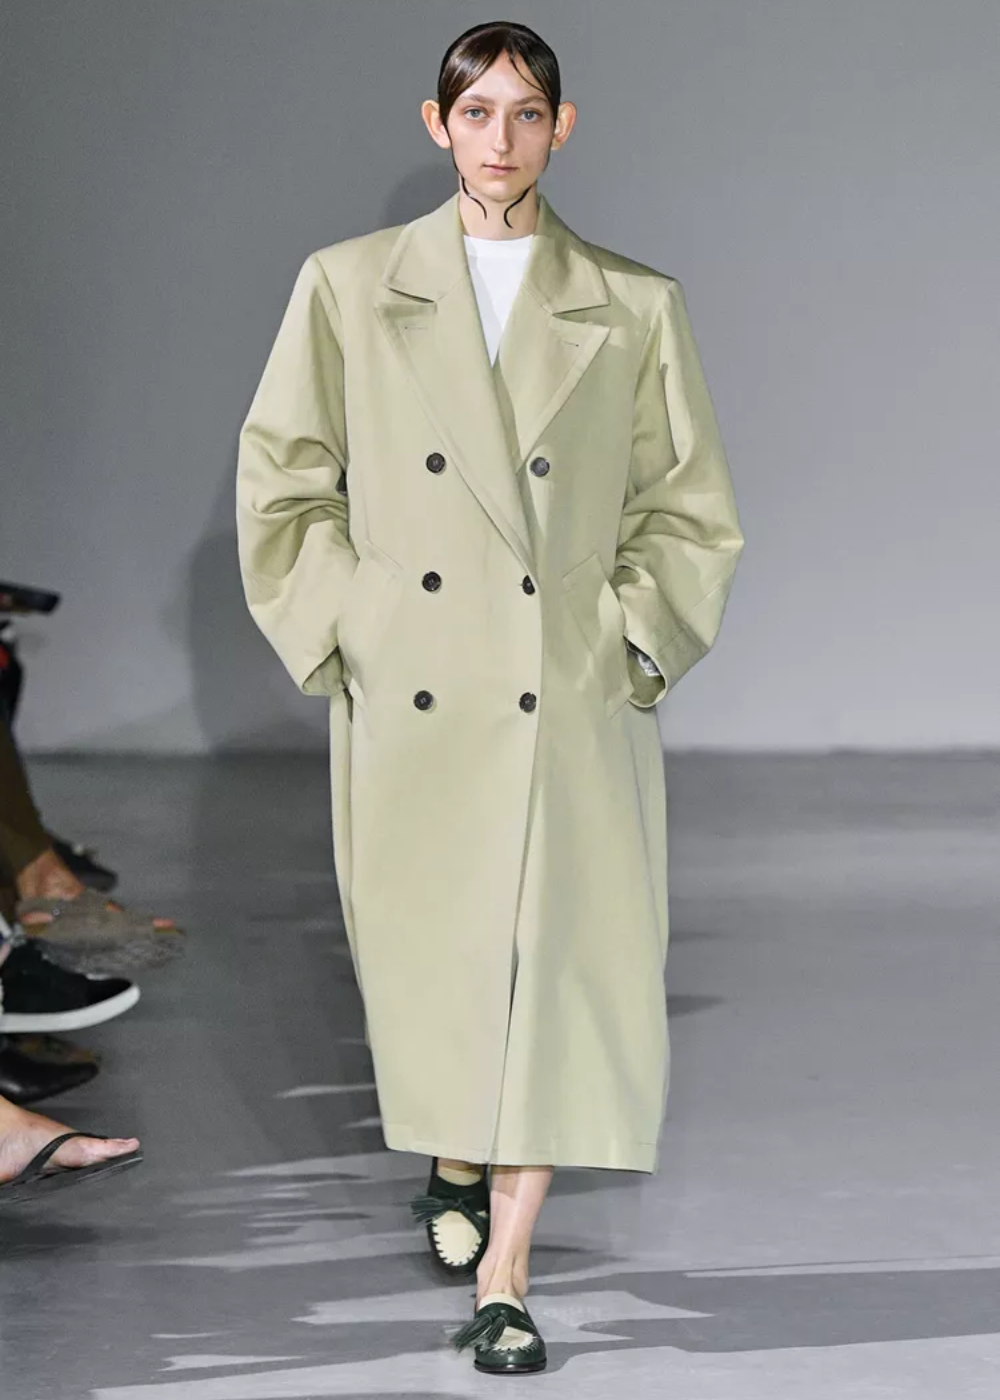 Mark Kenly Domino Tan - casaco longo bege e mocassim - semana de moda de Copenhagen - Primavera - modelo andando pela passarela - https://stealthelook.com.br